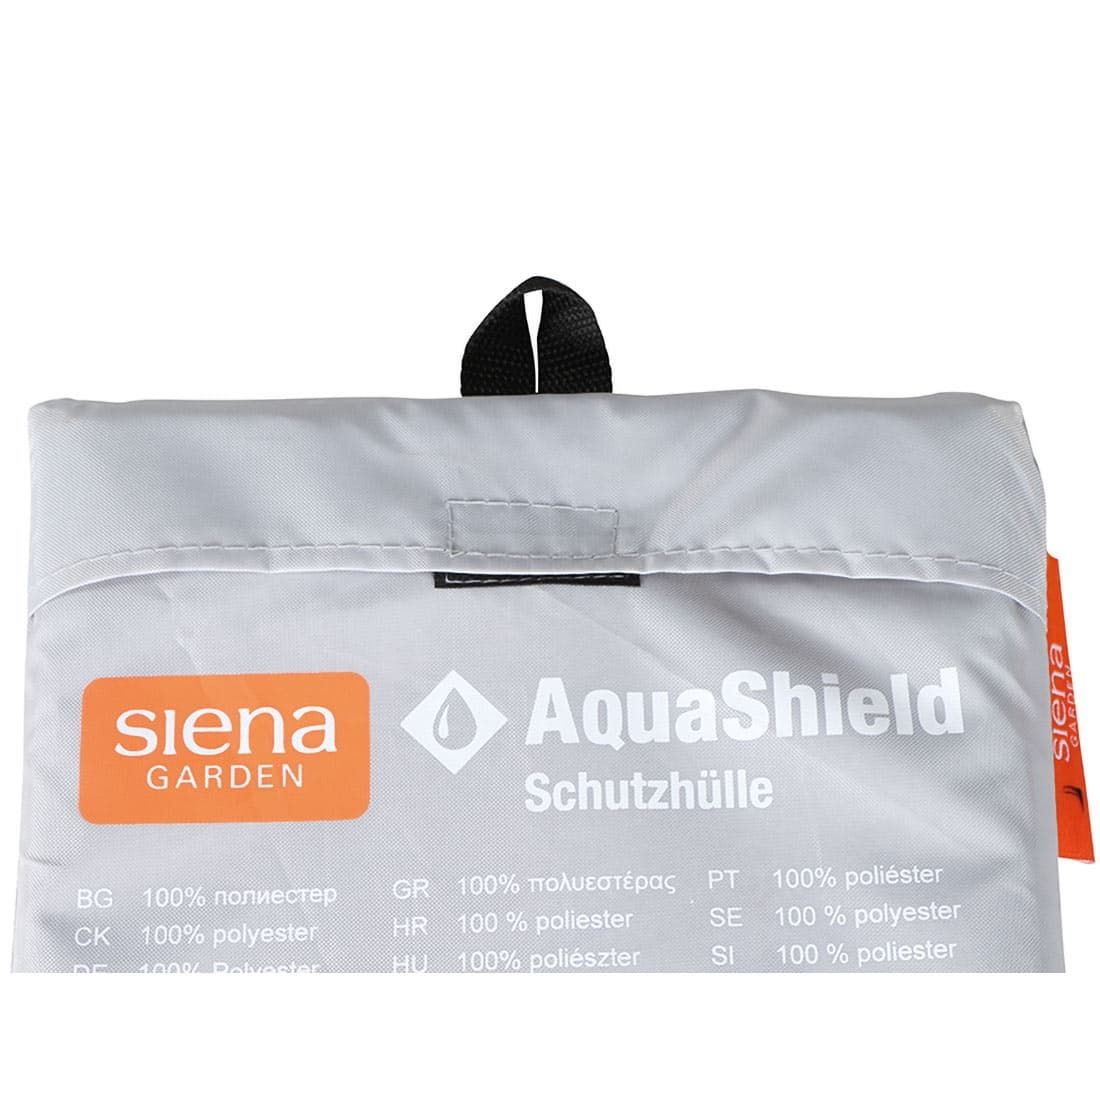 Siena Garden Aqua Shield Sitzgruppenhaube 200x160x85cm